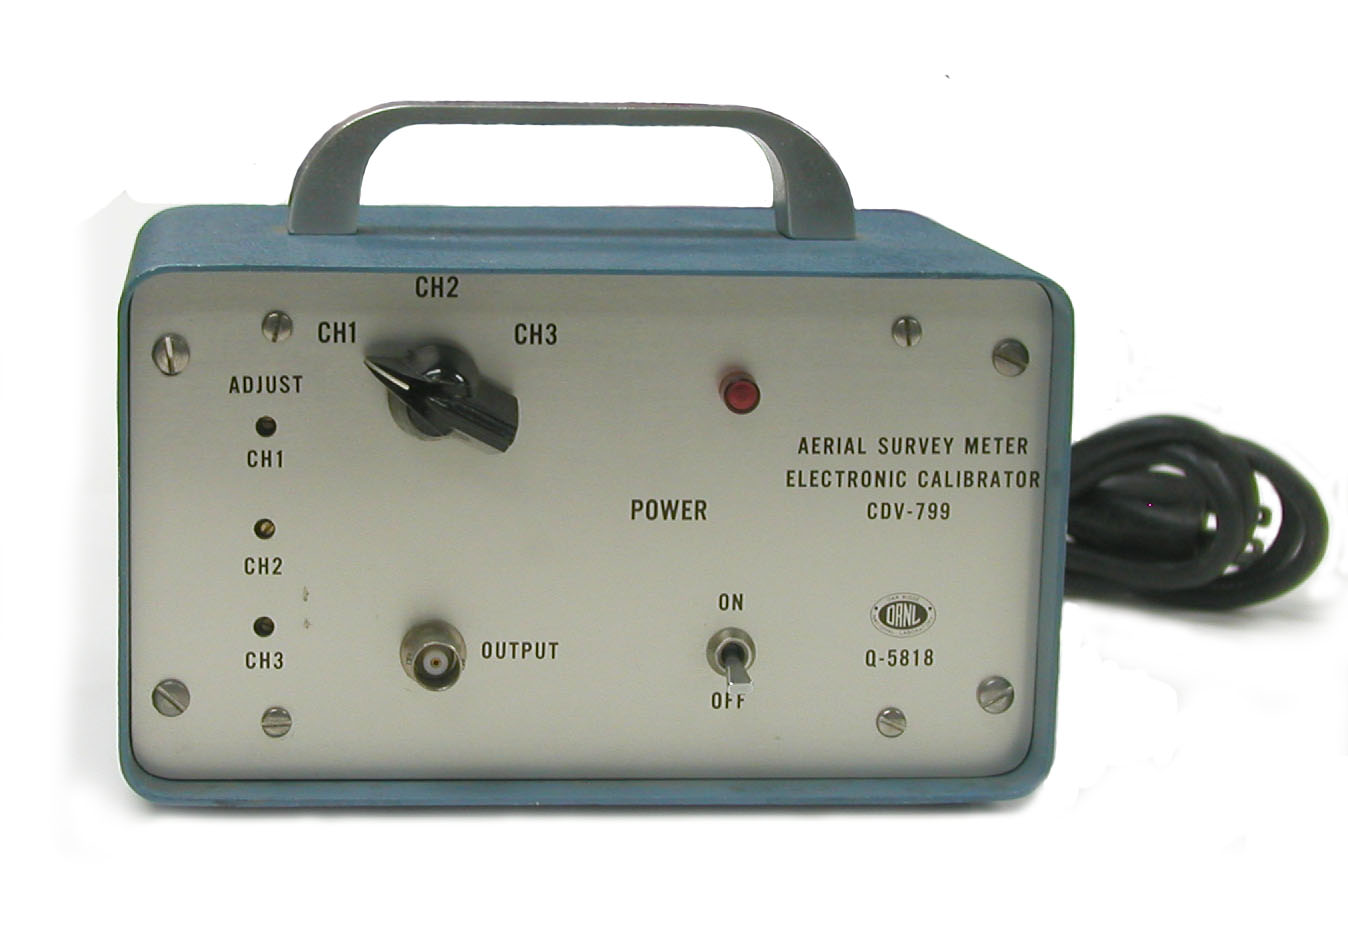 CD V-799 Electronic Calibrator for Aerial Survey Meter